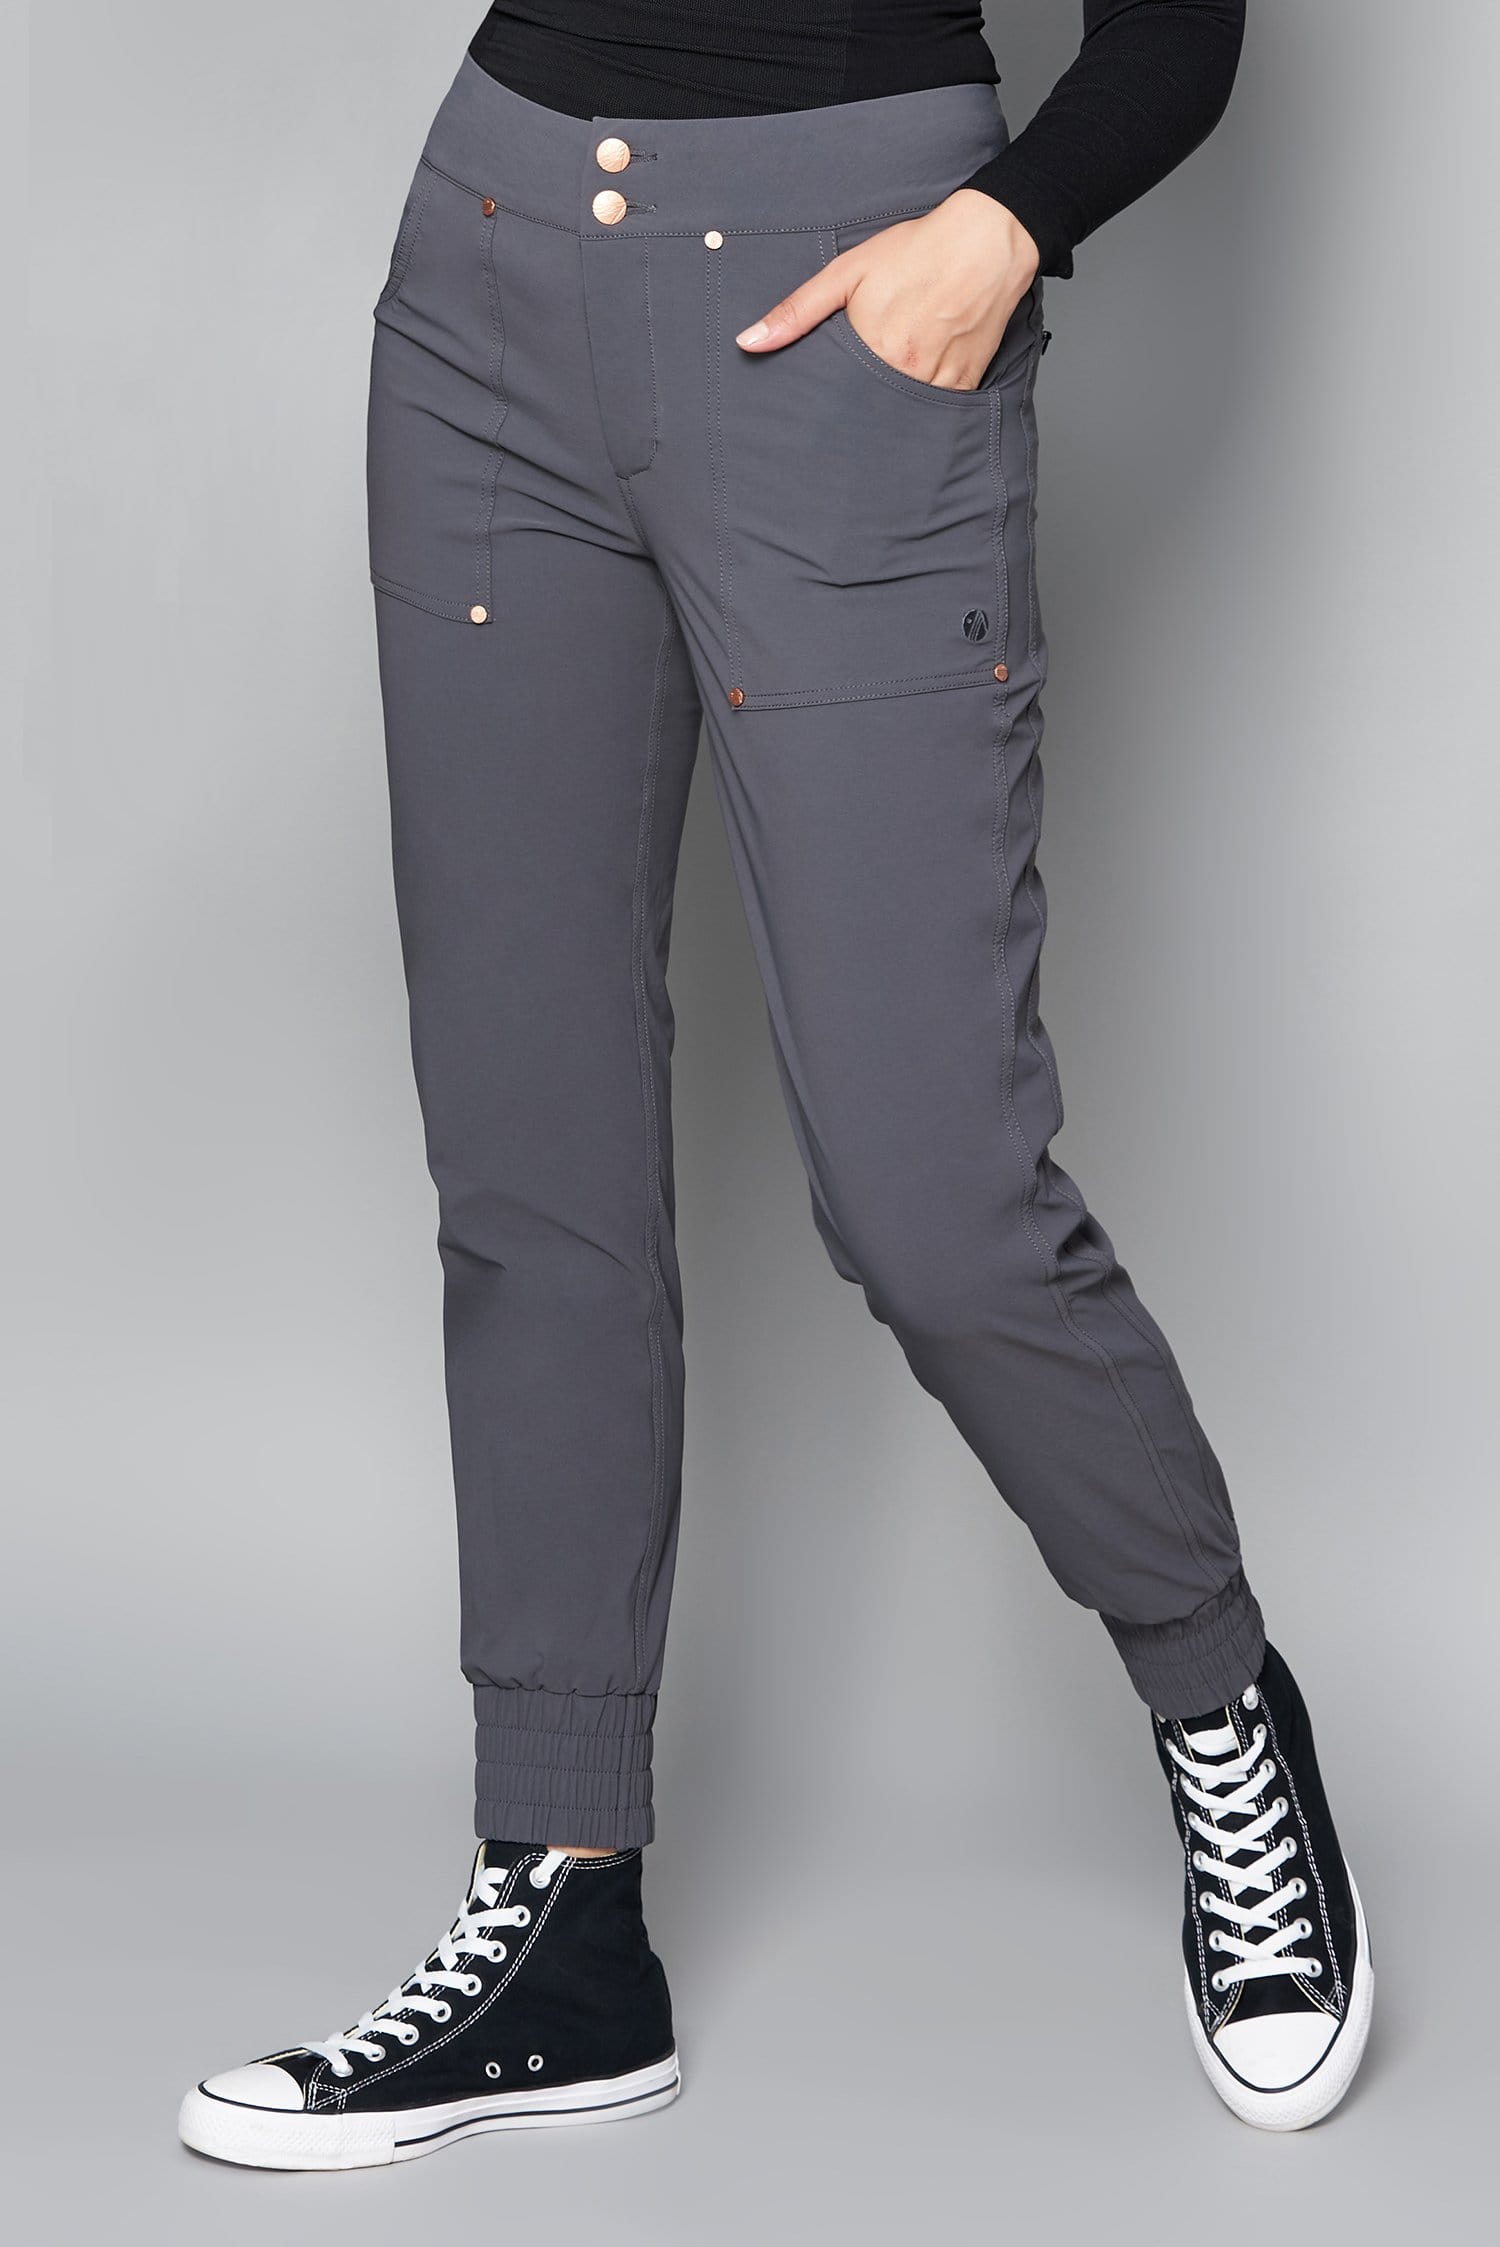 Casual Stroll Pants - Storm Grey - 34r / Uk16 - Womens - Acai Outdoorwear